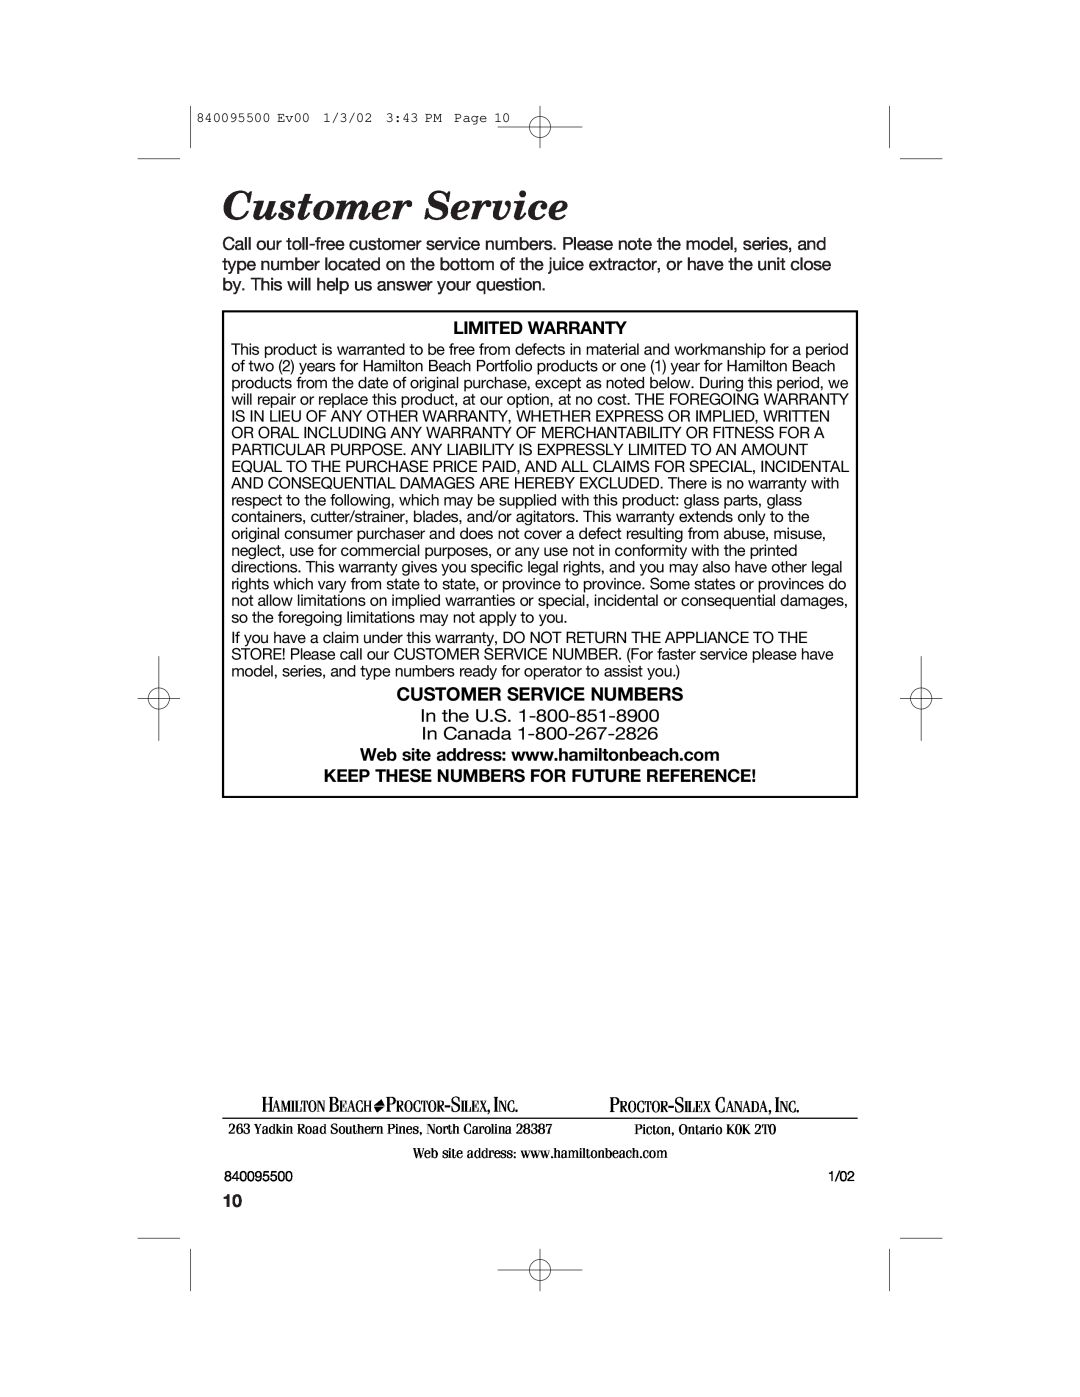 Hamilton Beach 840095500 manual Customer Service Numbers 